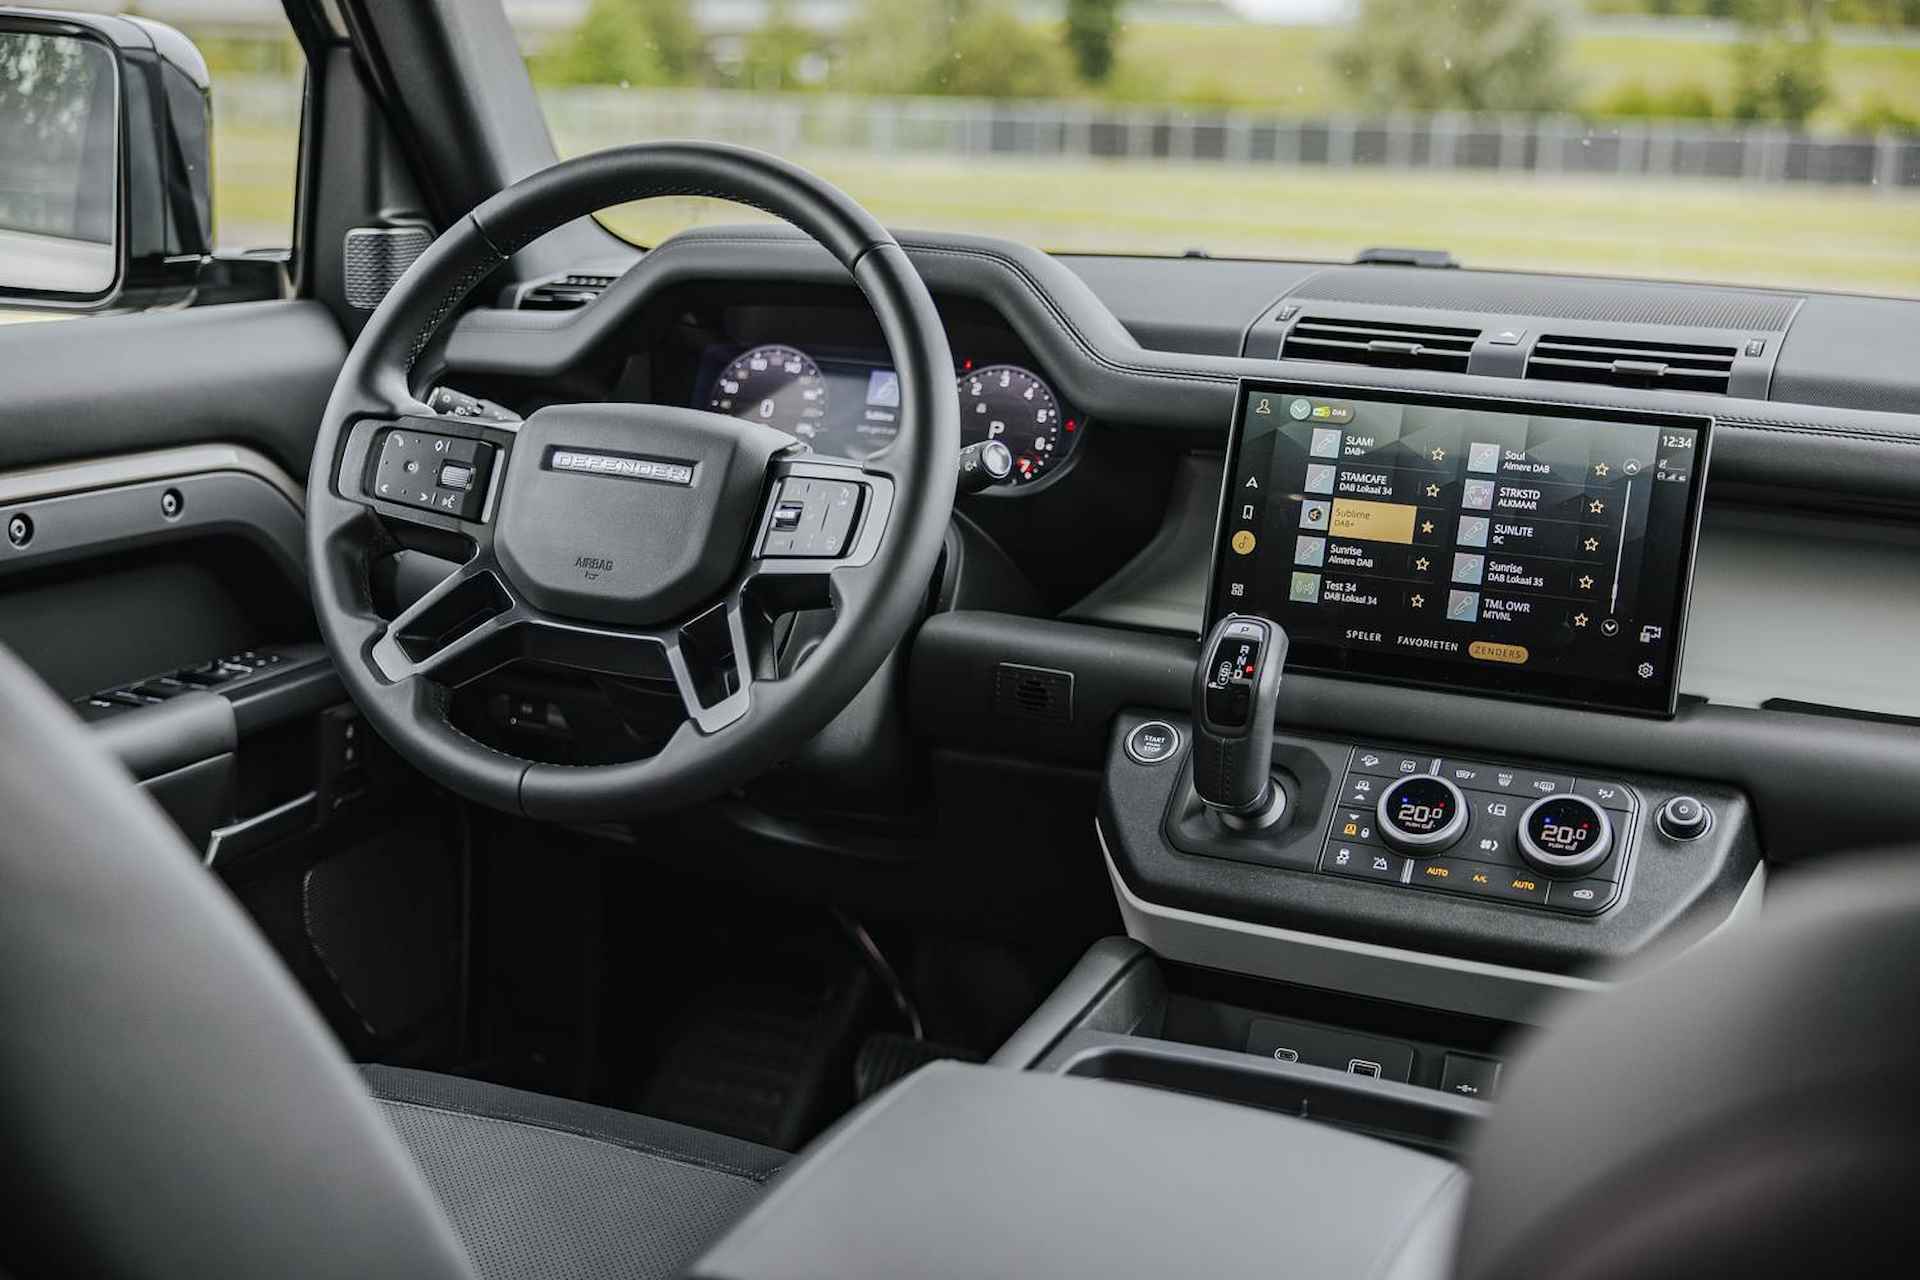 Land Rover Defender 2.0 P400e 110 X-Dynamic HSE | Panoramadak | 22" Velgen in Gloss Black | 11,4" Touch Screen | Cold Climate Pack | Elektrische Trekhaak | Expedition imperiaal | Uitklapbare Dakladder| All Season Banden - 25/43